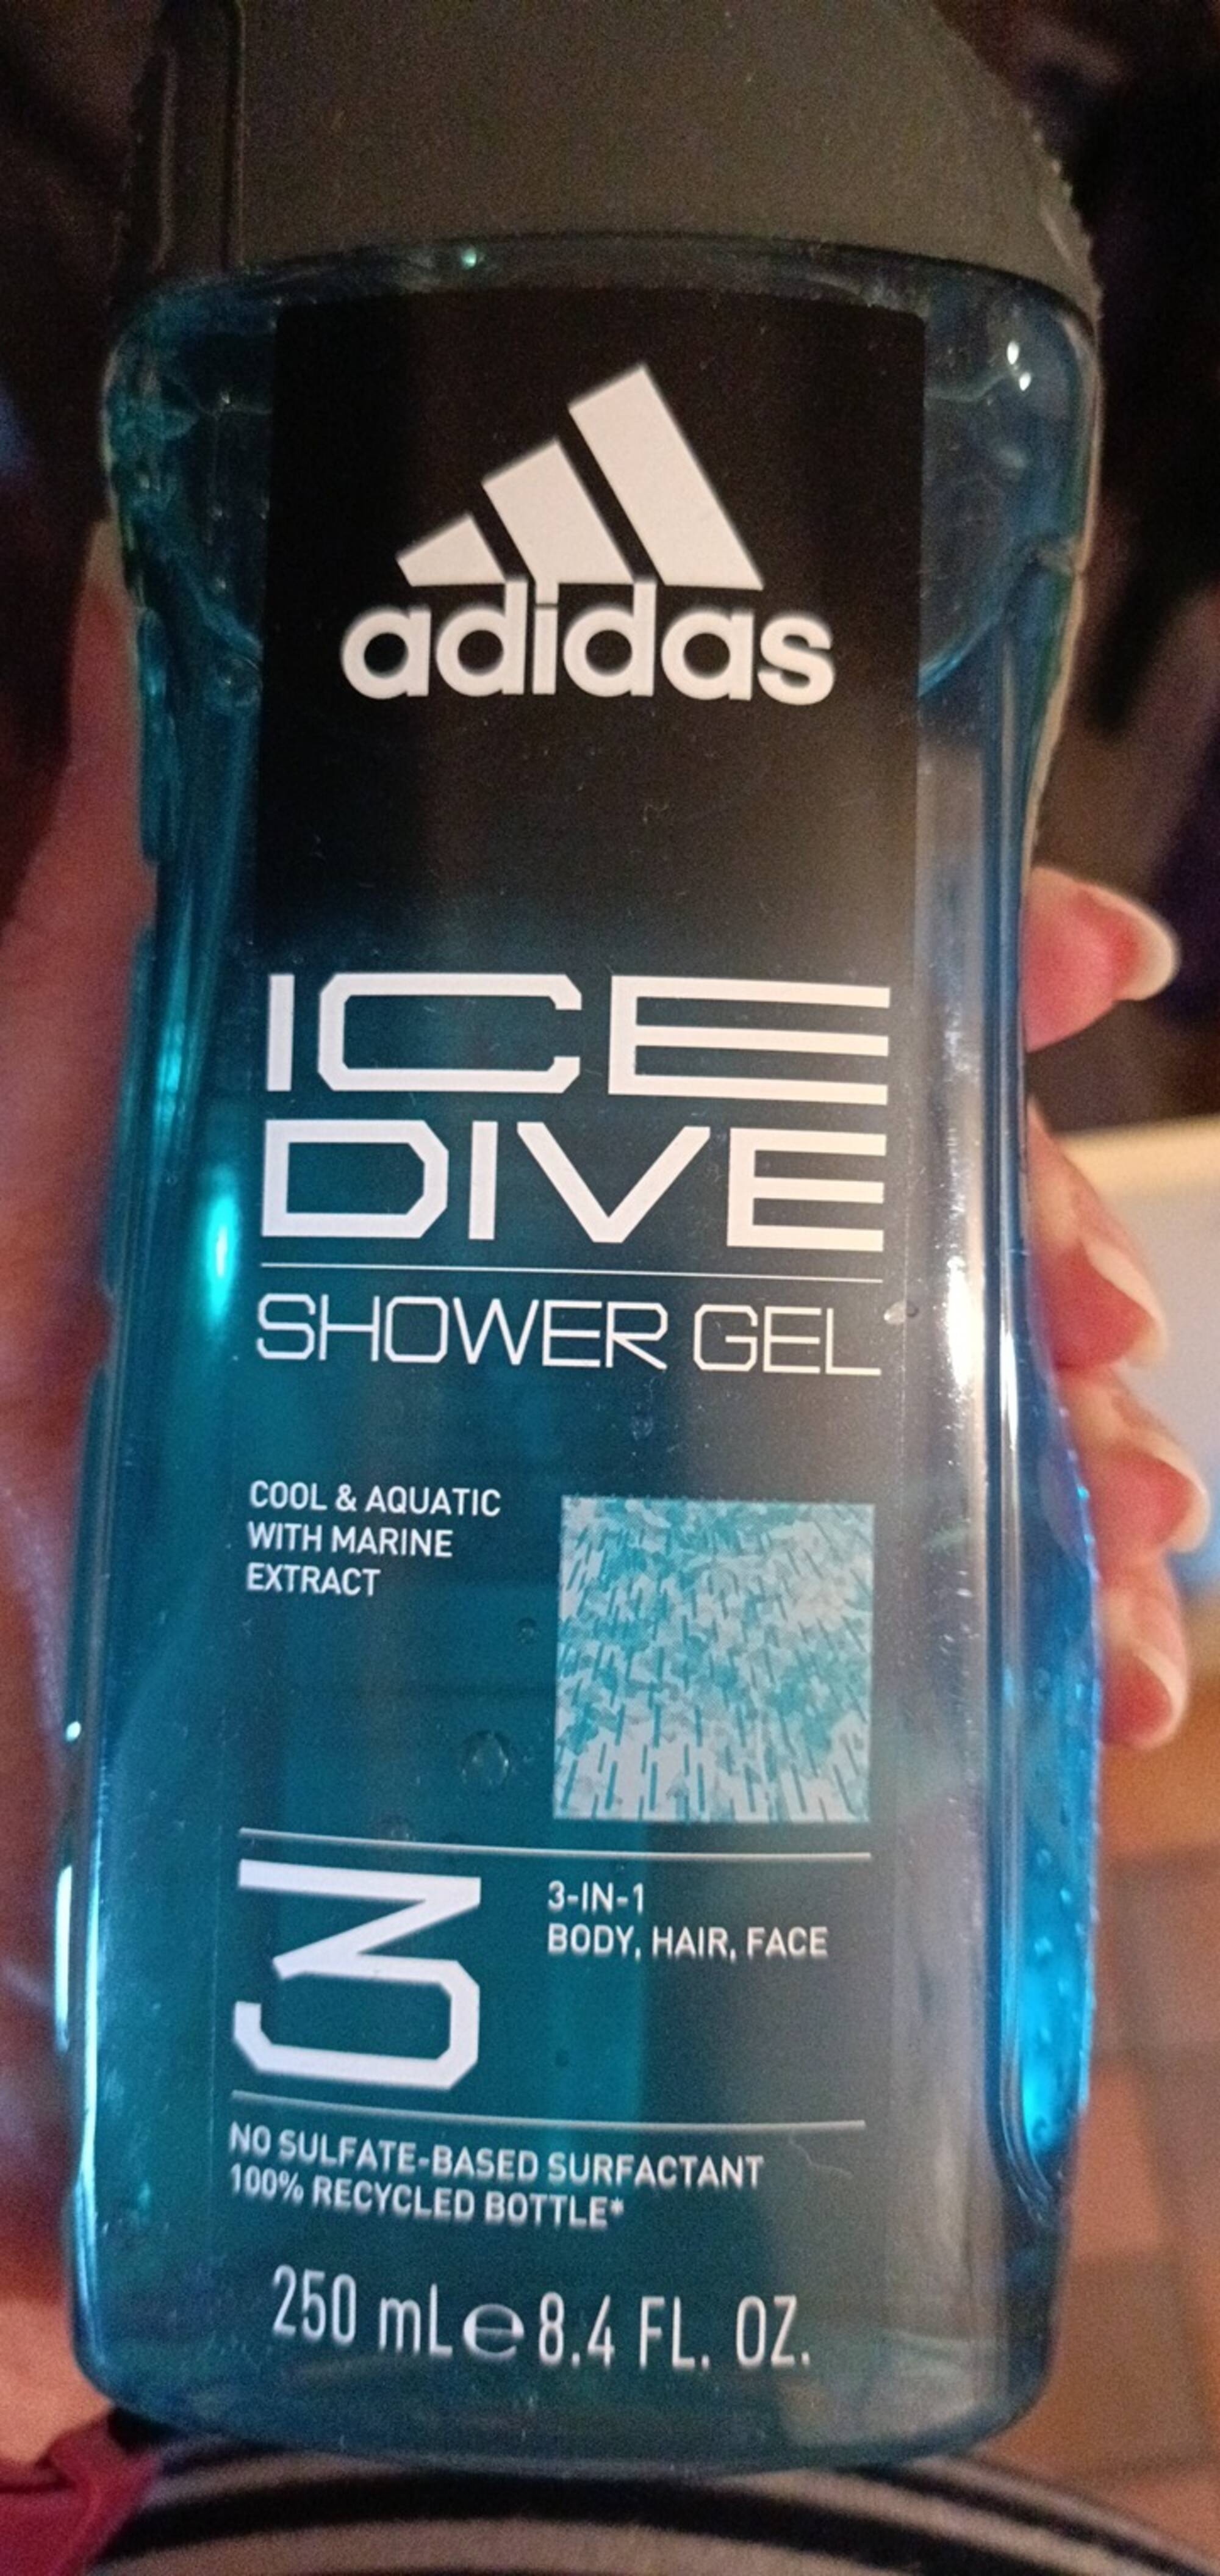 ADIDAS - Ice dive - Shower gel 3-in-1 